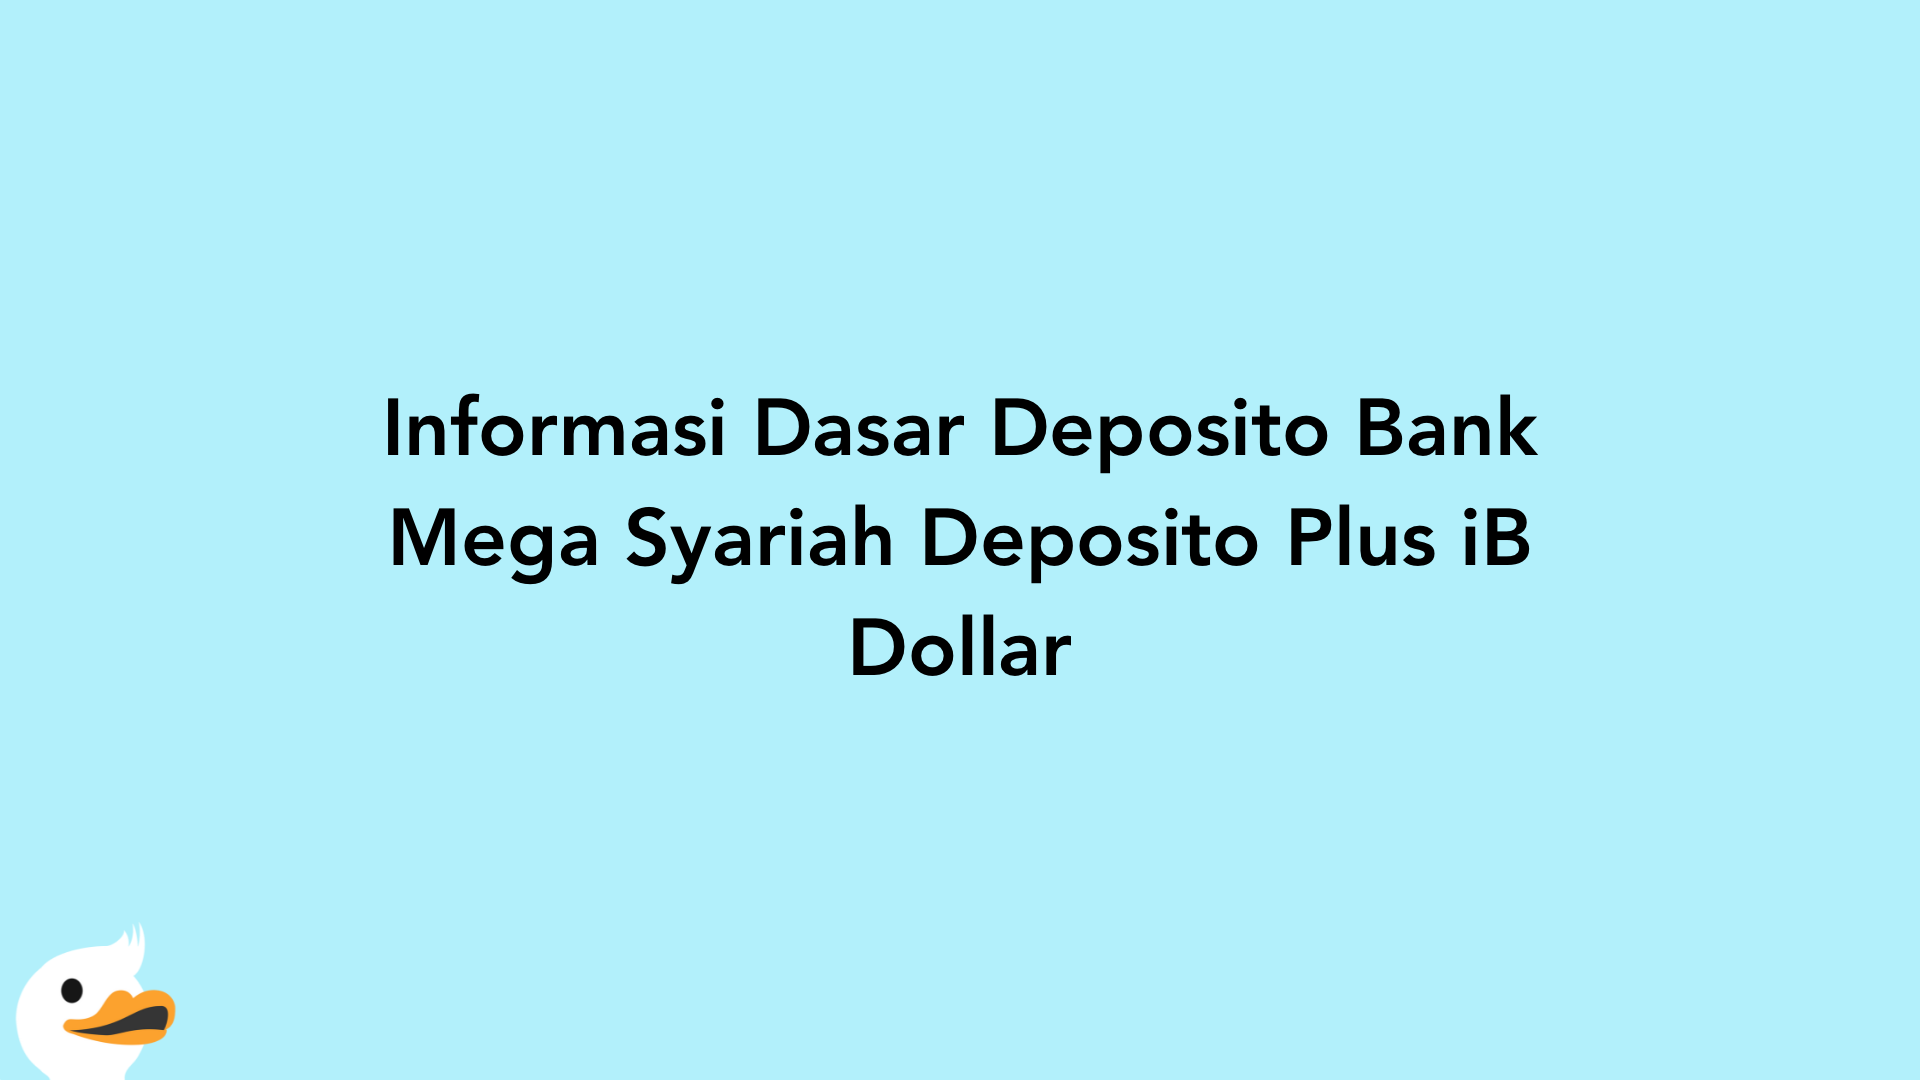 Informasi Dasar Deposito Bank Mega Syariah Deposito Plus iB Dollar